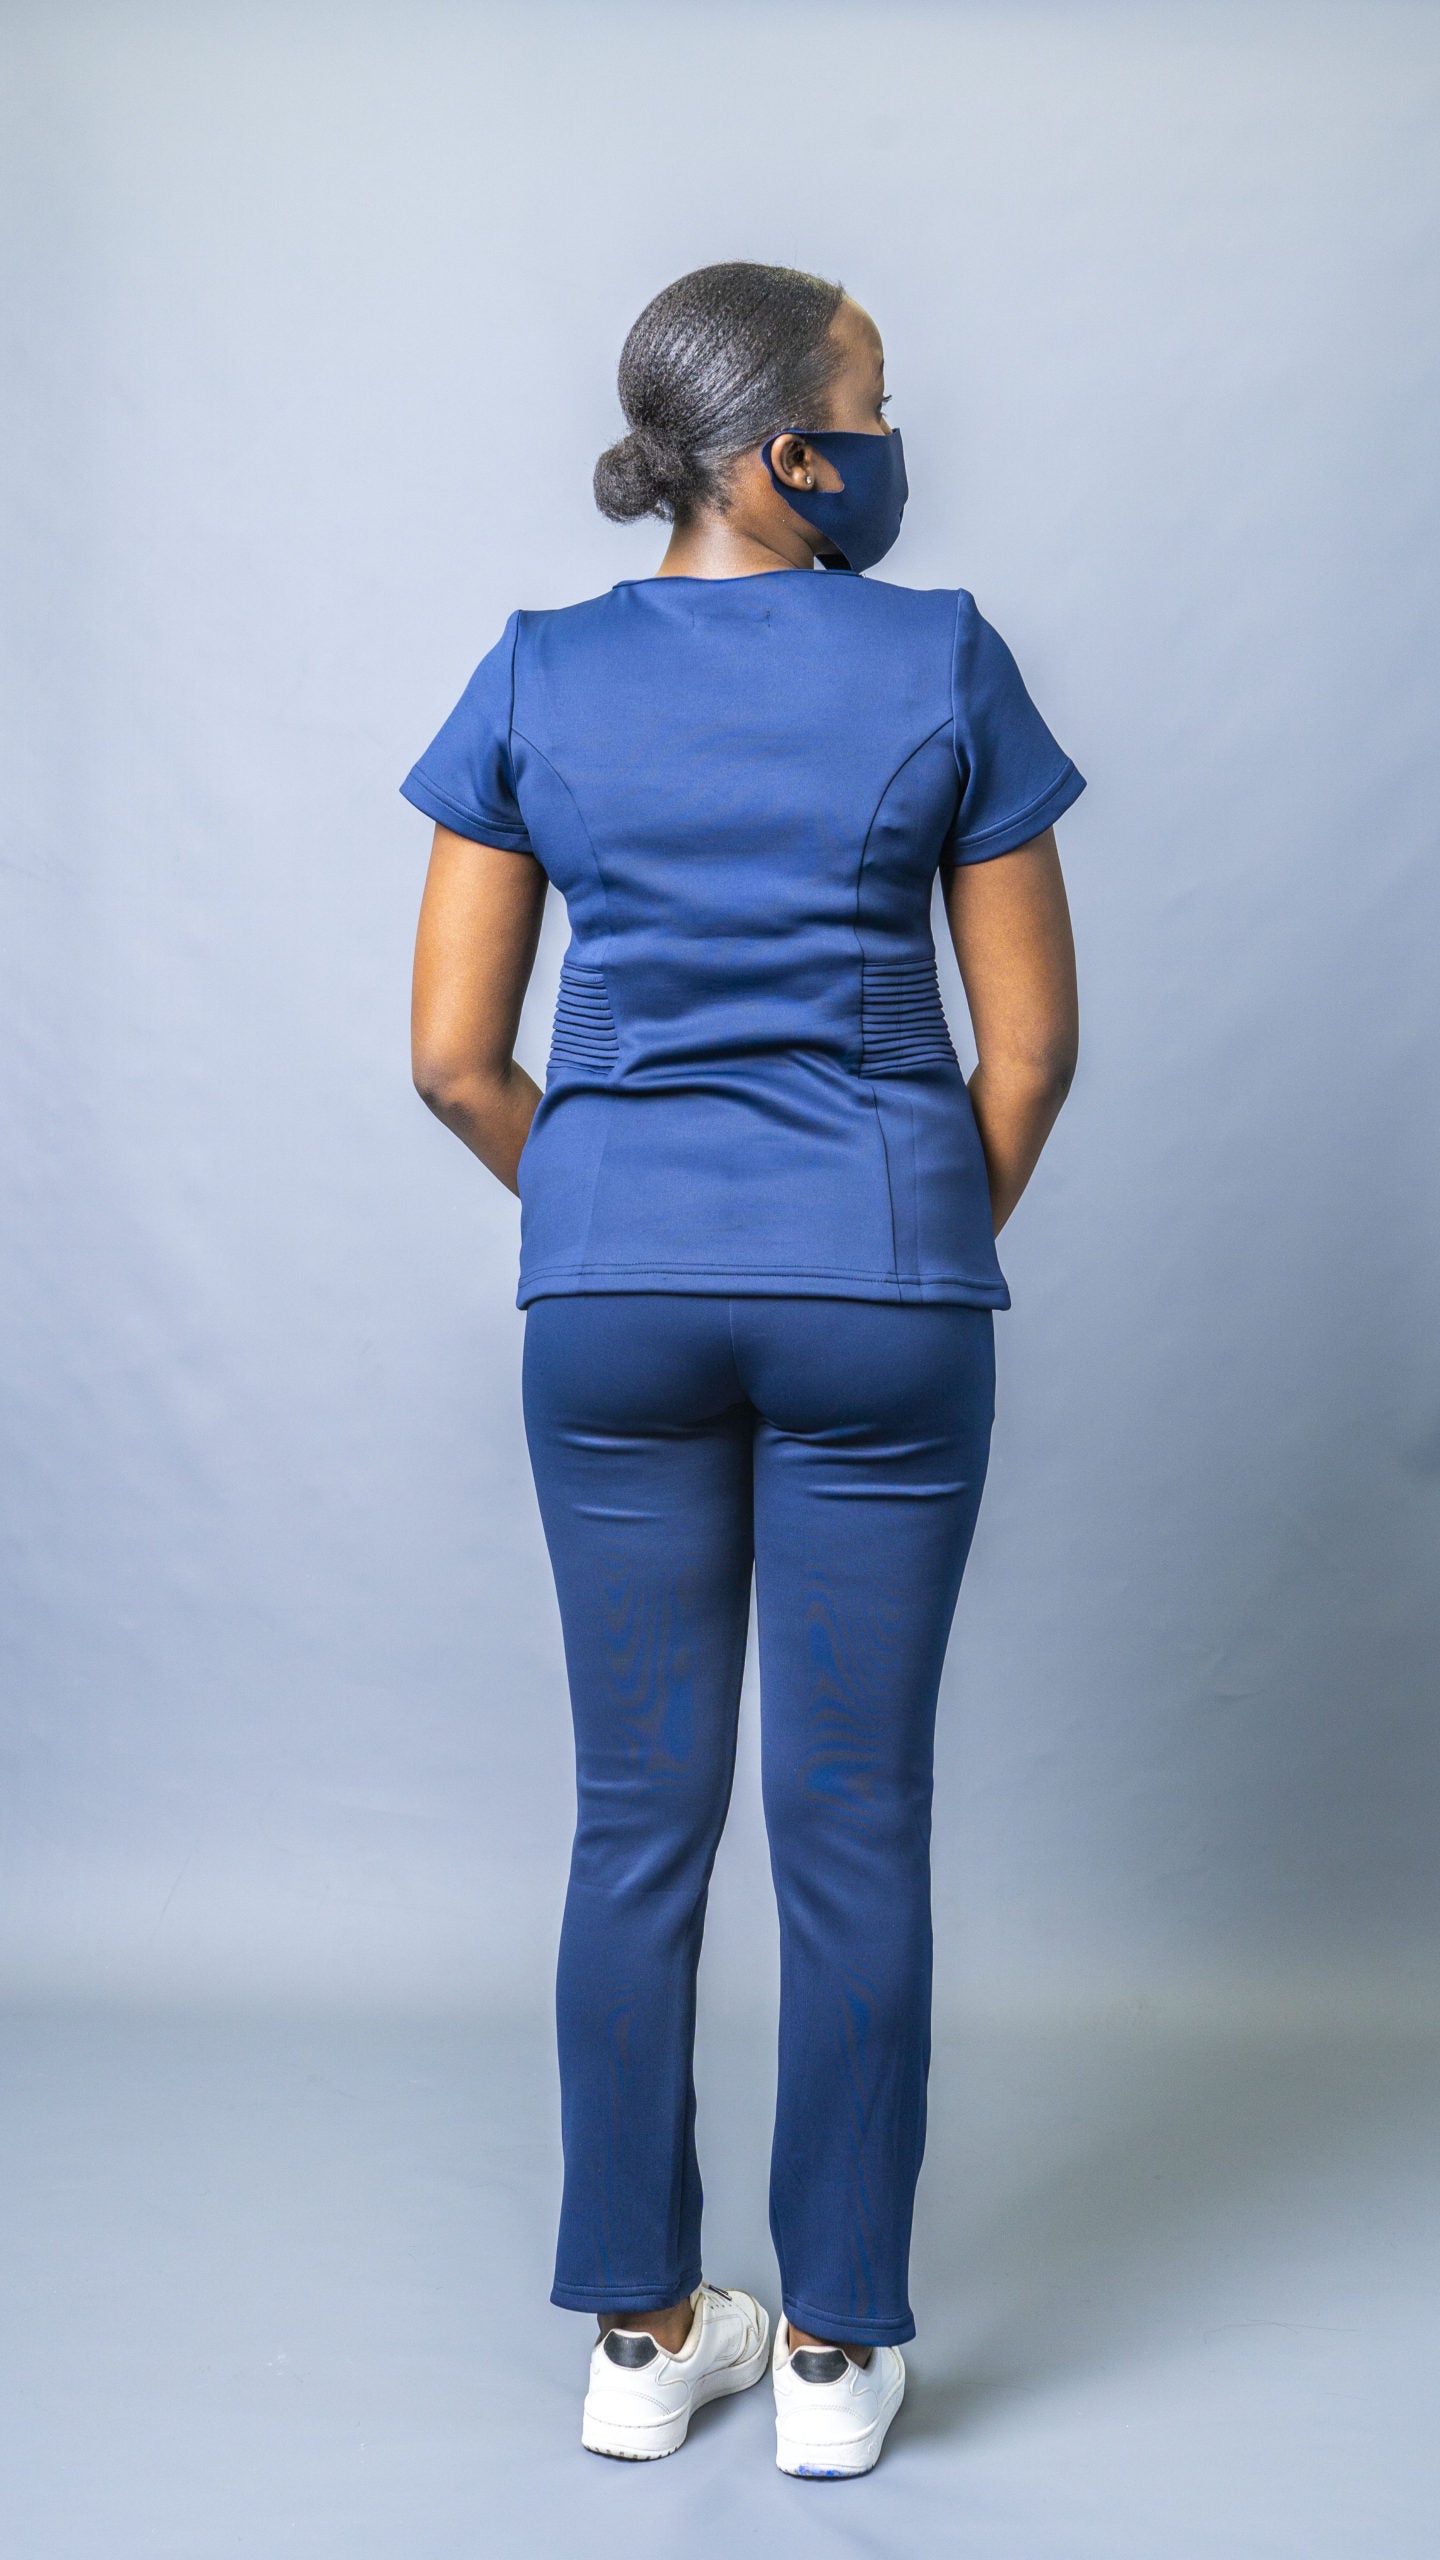 High-quality women's medical scrubs